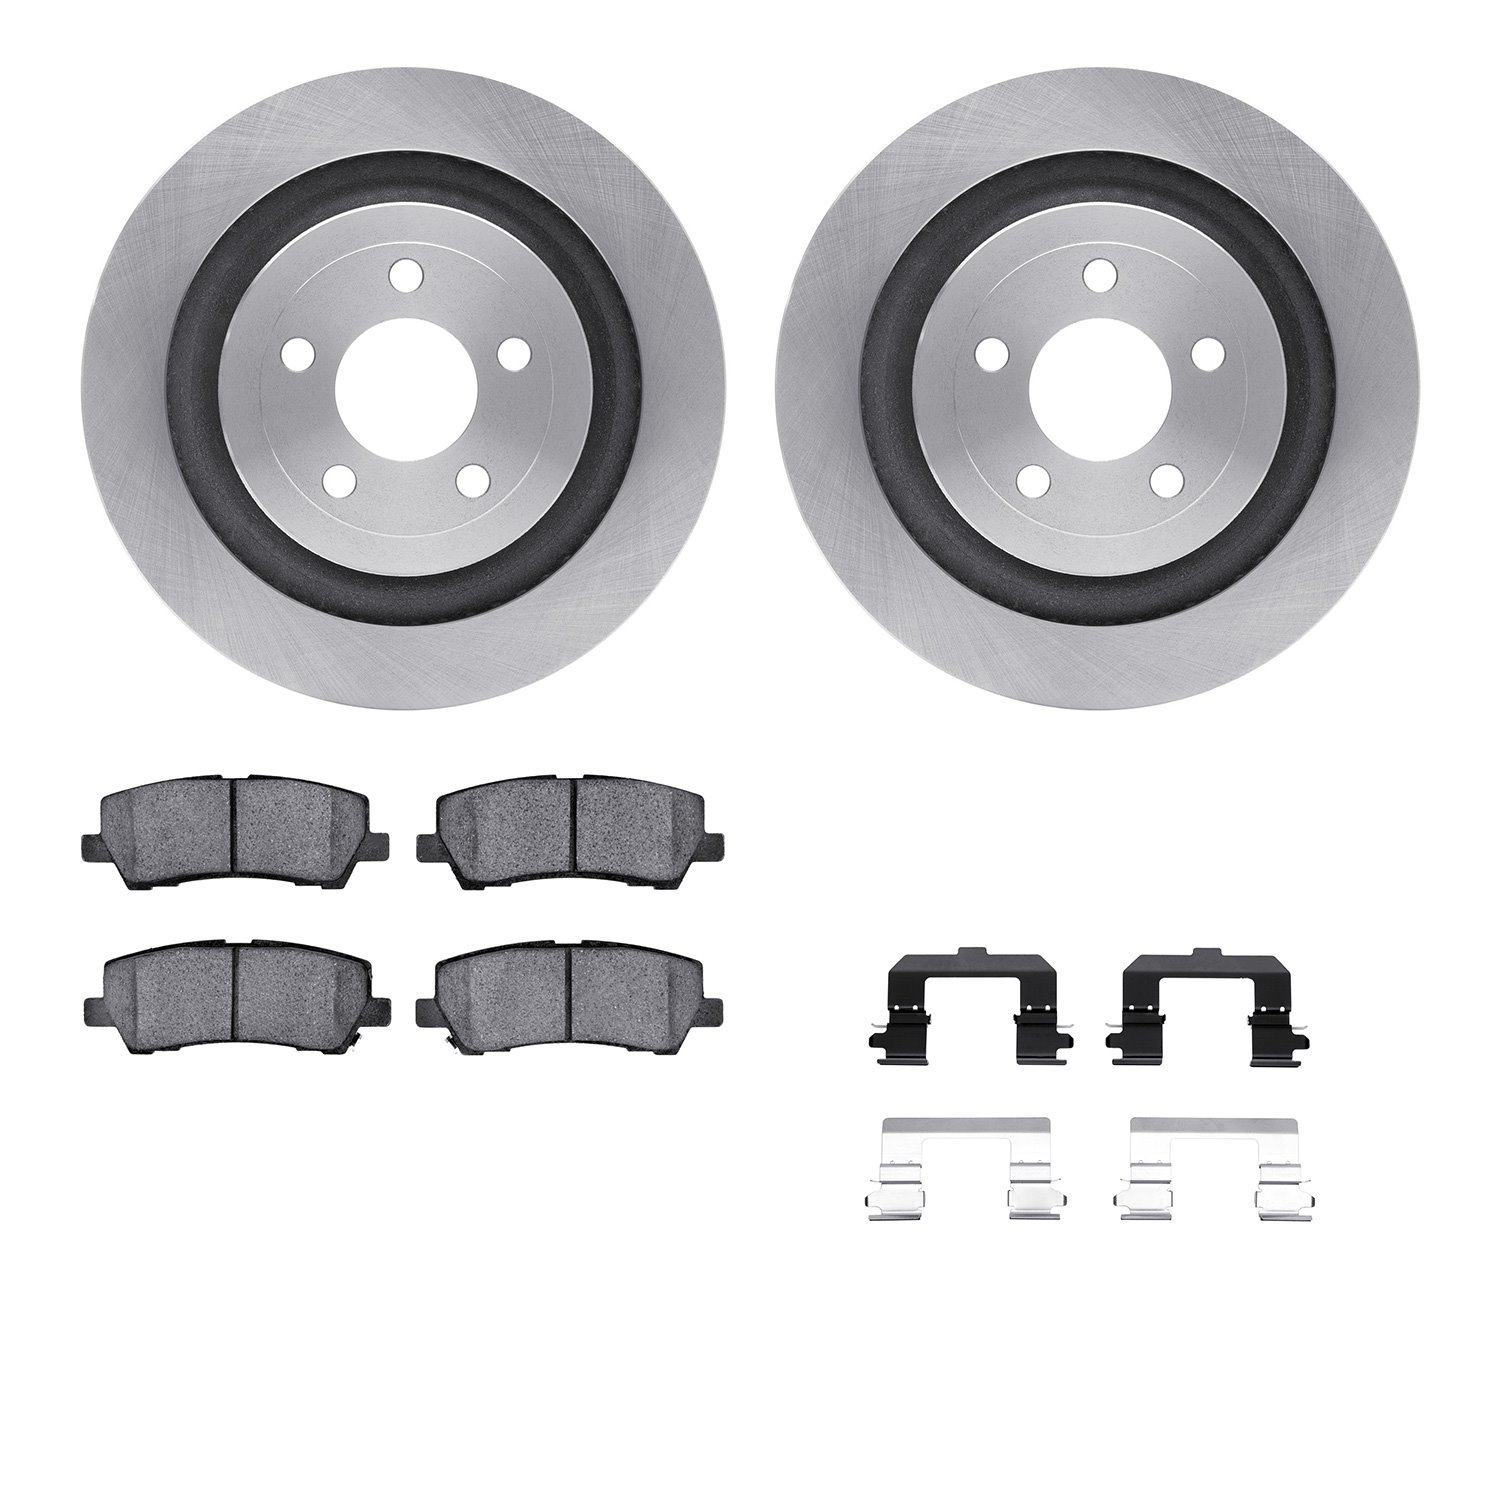 6212-99149 Brake Rotors w/Heavy-Duty Brake Pads Kit & Hardware, Fits Select Ford/Lincoln/Mercury/Mazda, Position: Rear